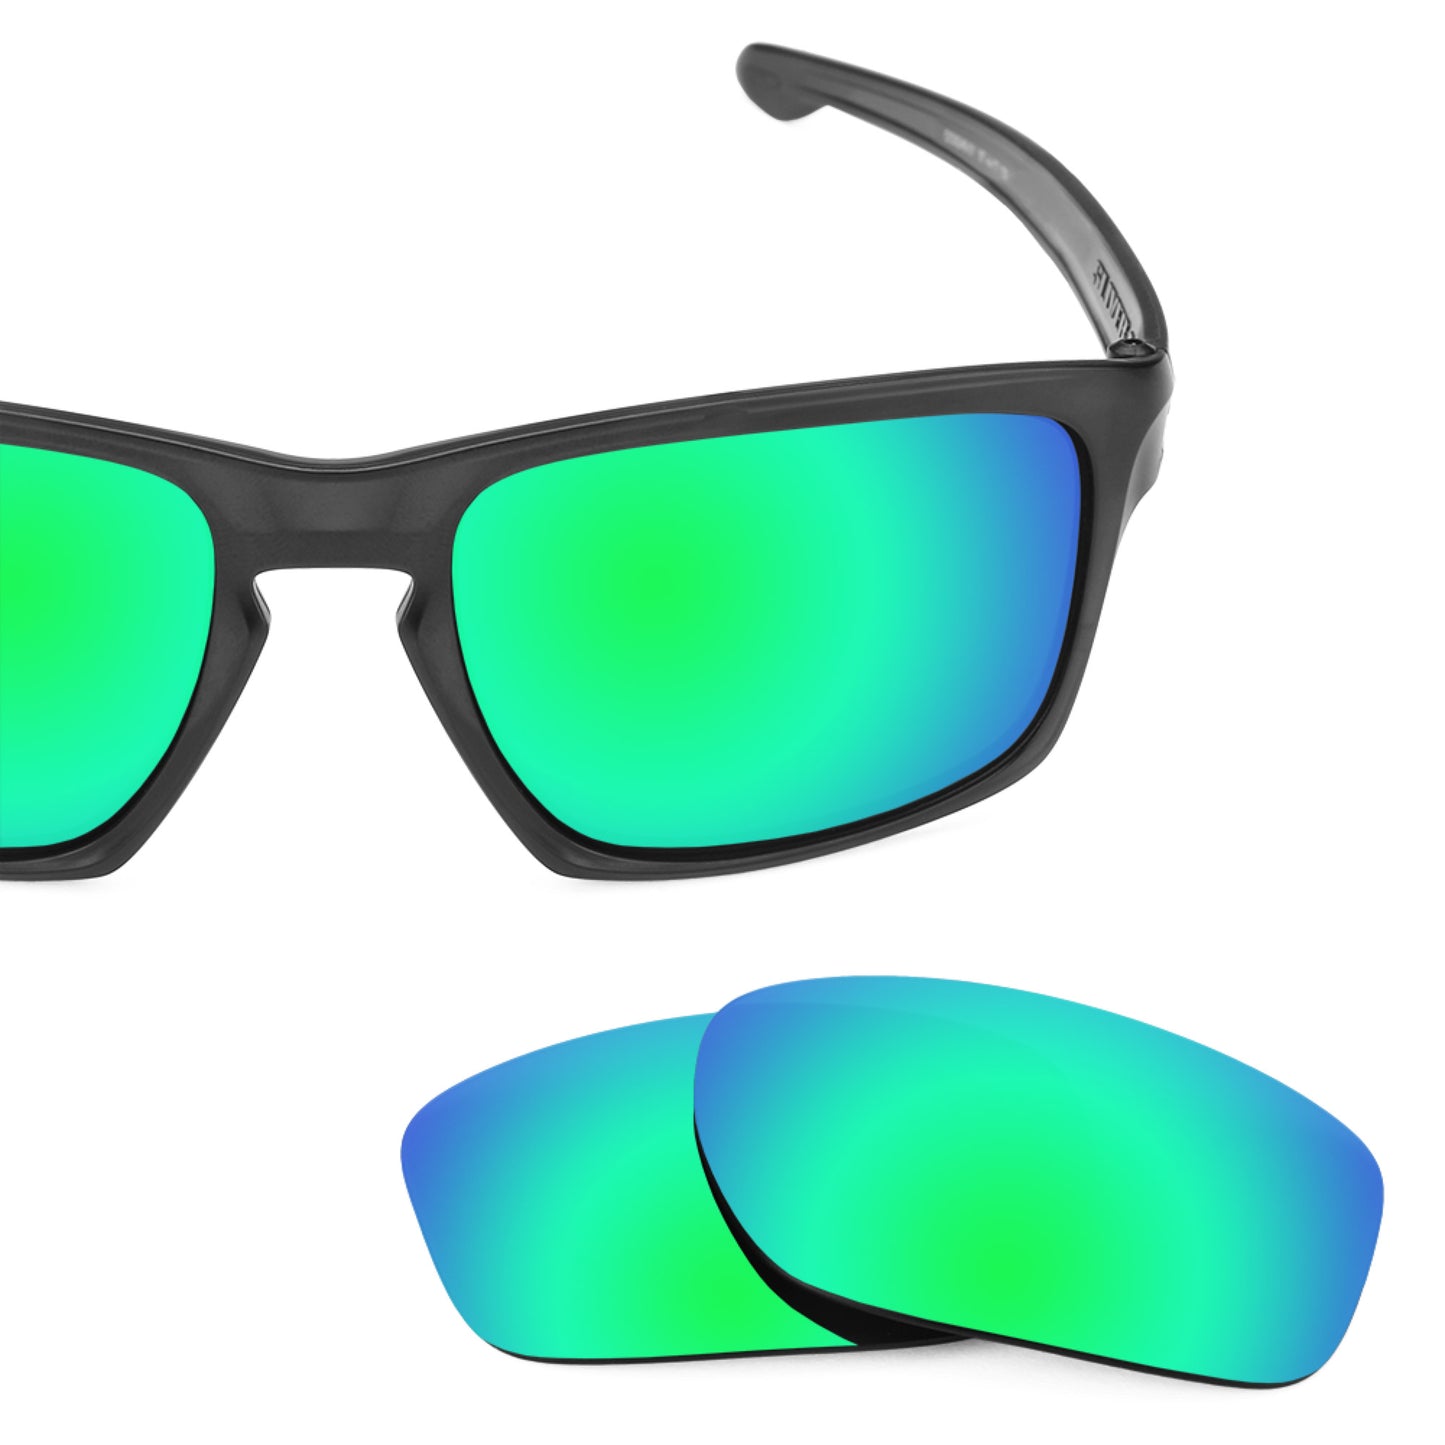 Revant replacement lenses for Oakley Sliver Non-Polarized Emerald Green